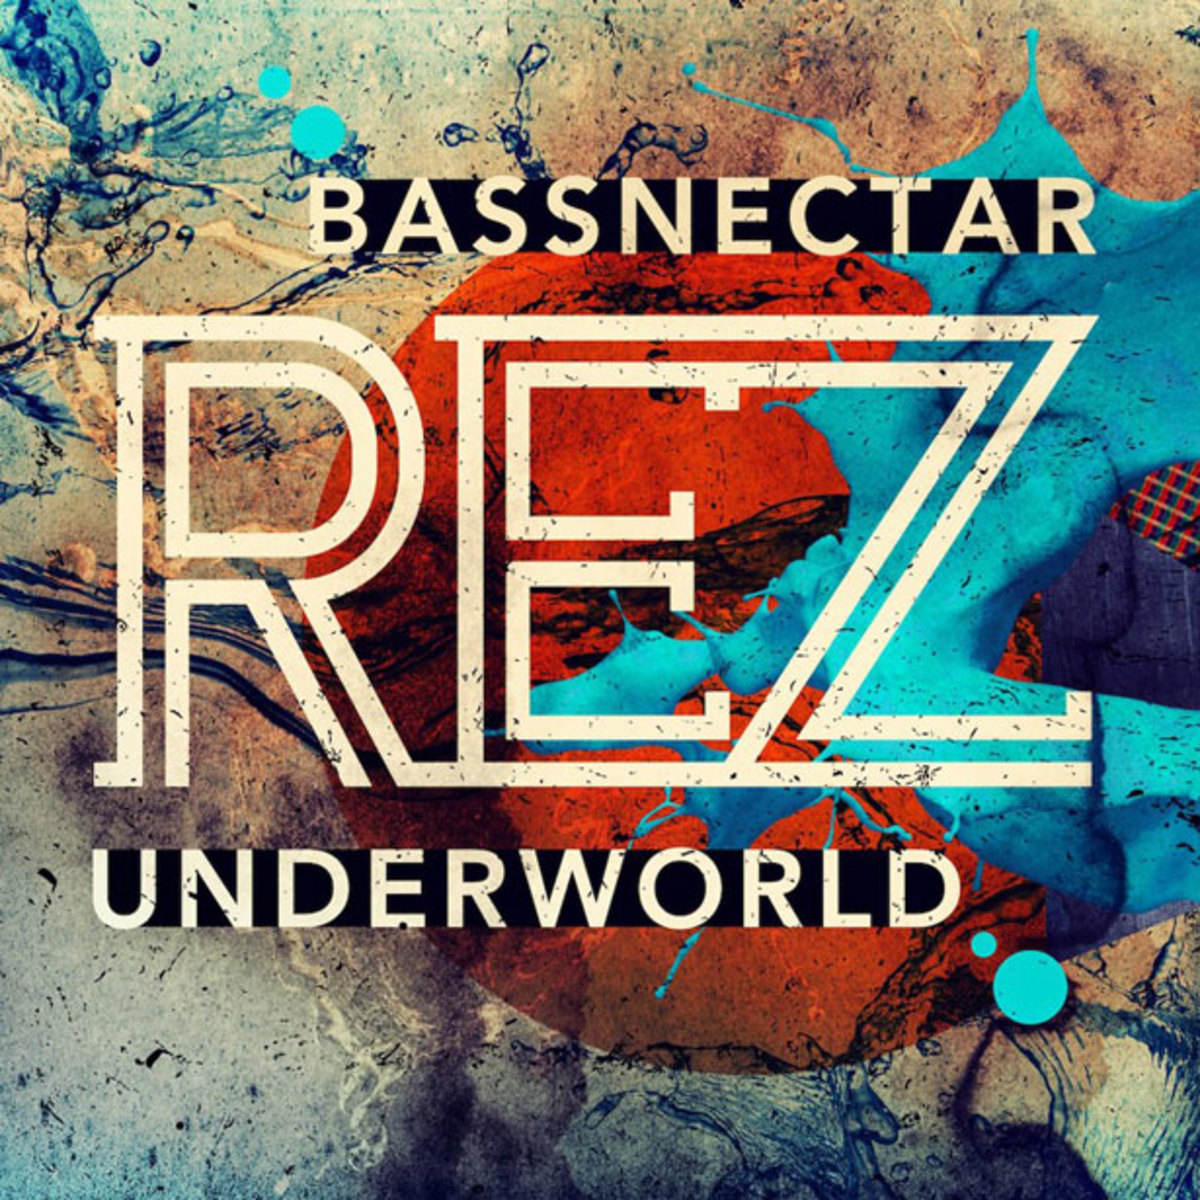 Listen: Underworld "Rez" Bassnectar Remix